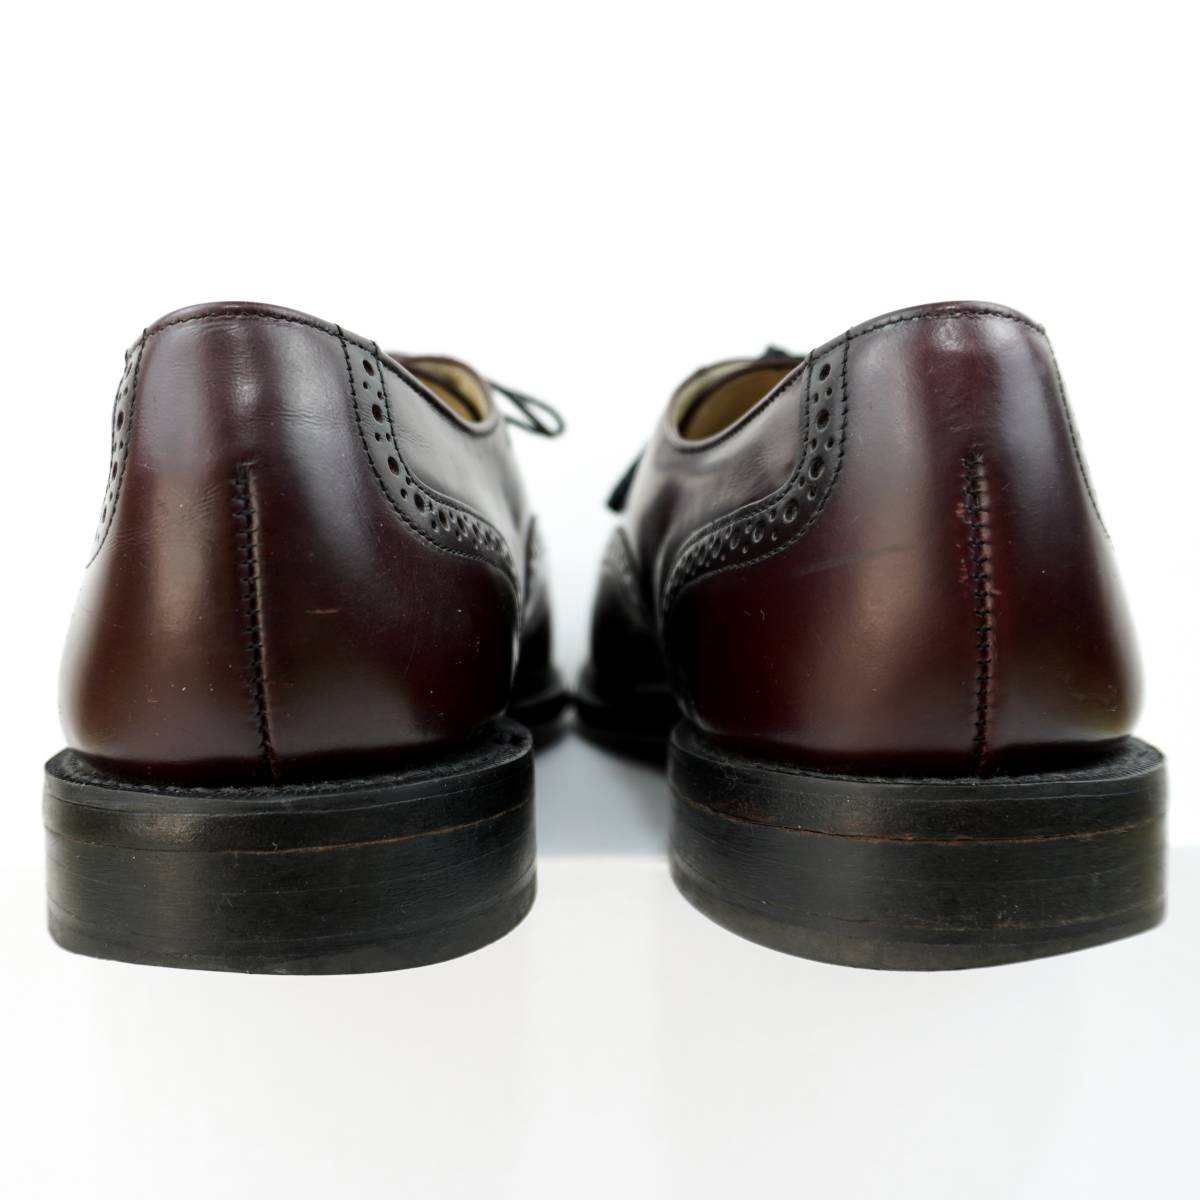 BOSTONIAN IMPRESSION Cap Toe Shoes 1990s US10.0D ボストニアン インプレッション キャップトゥ 革靴 レザーシューズ 28.0cm